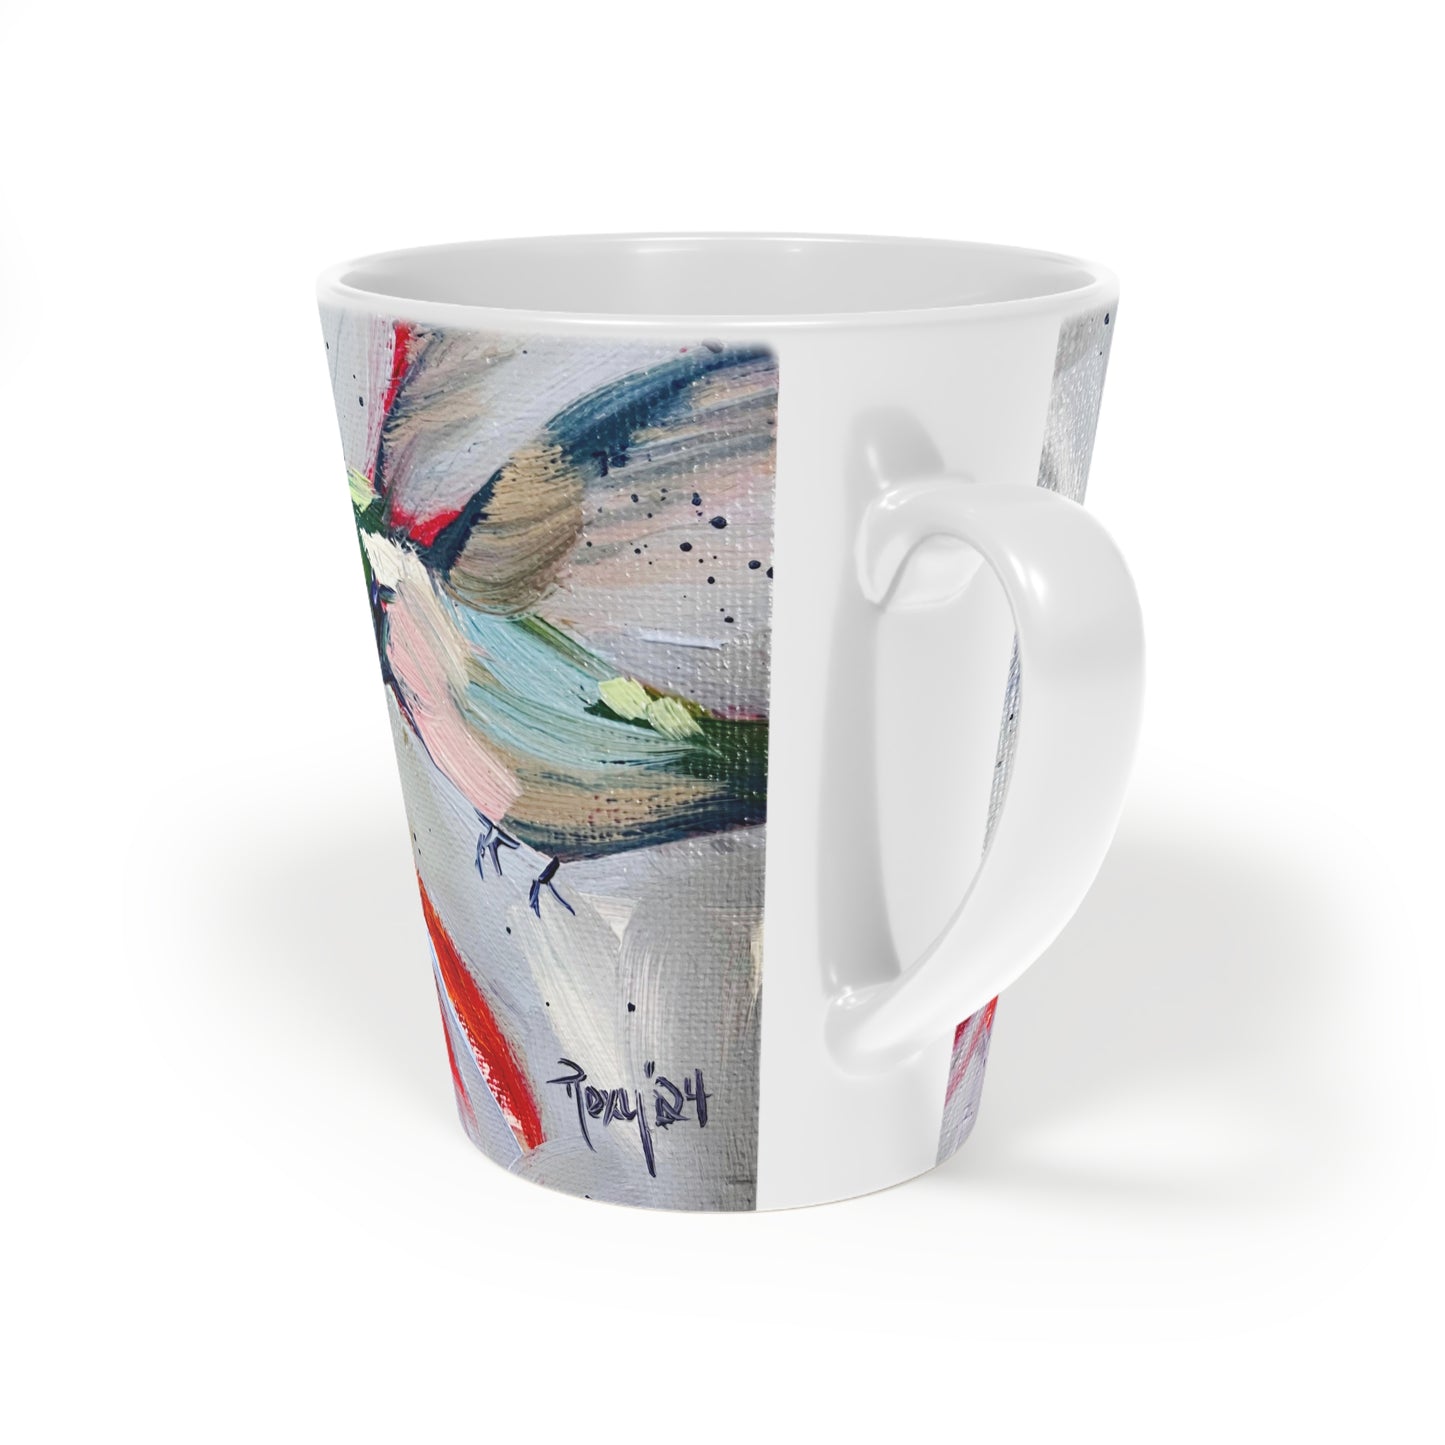 Adorable colibrí en una taza de café con leche Coneflower, 12 oz